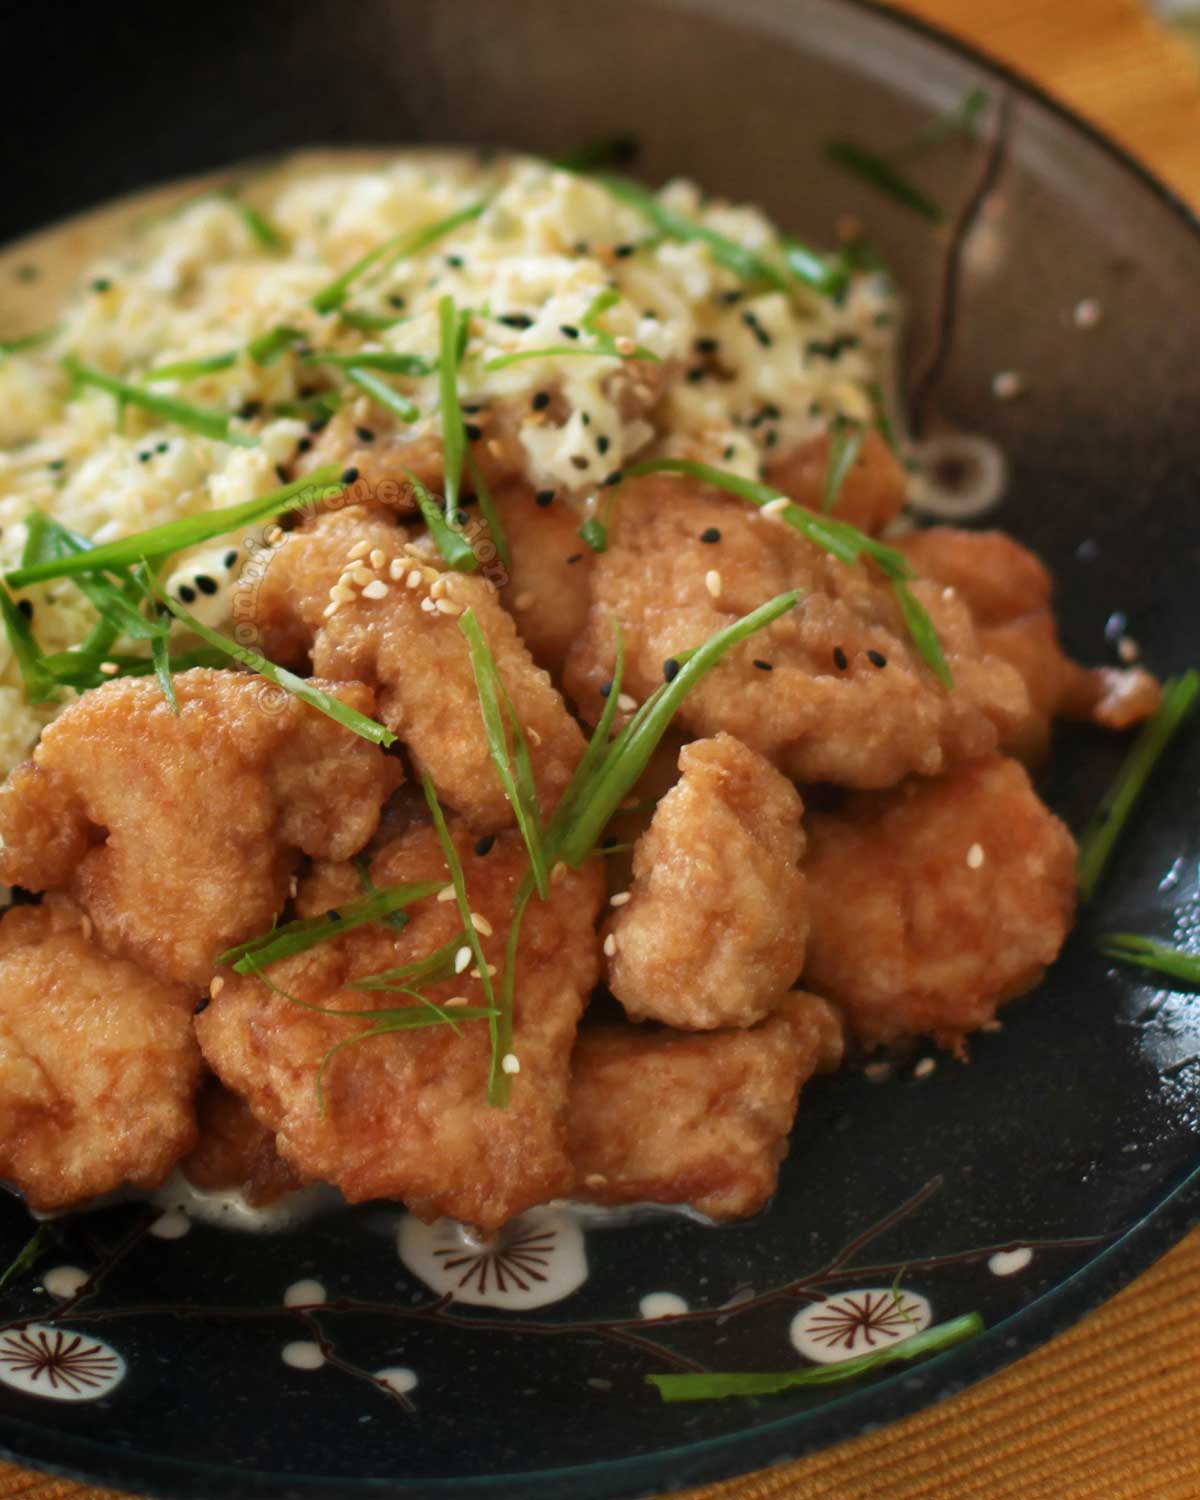 Japanese chicken nanban with tartar sauce